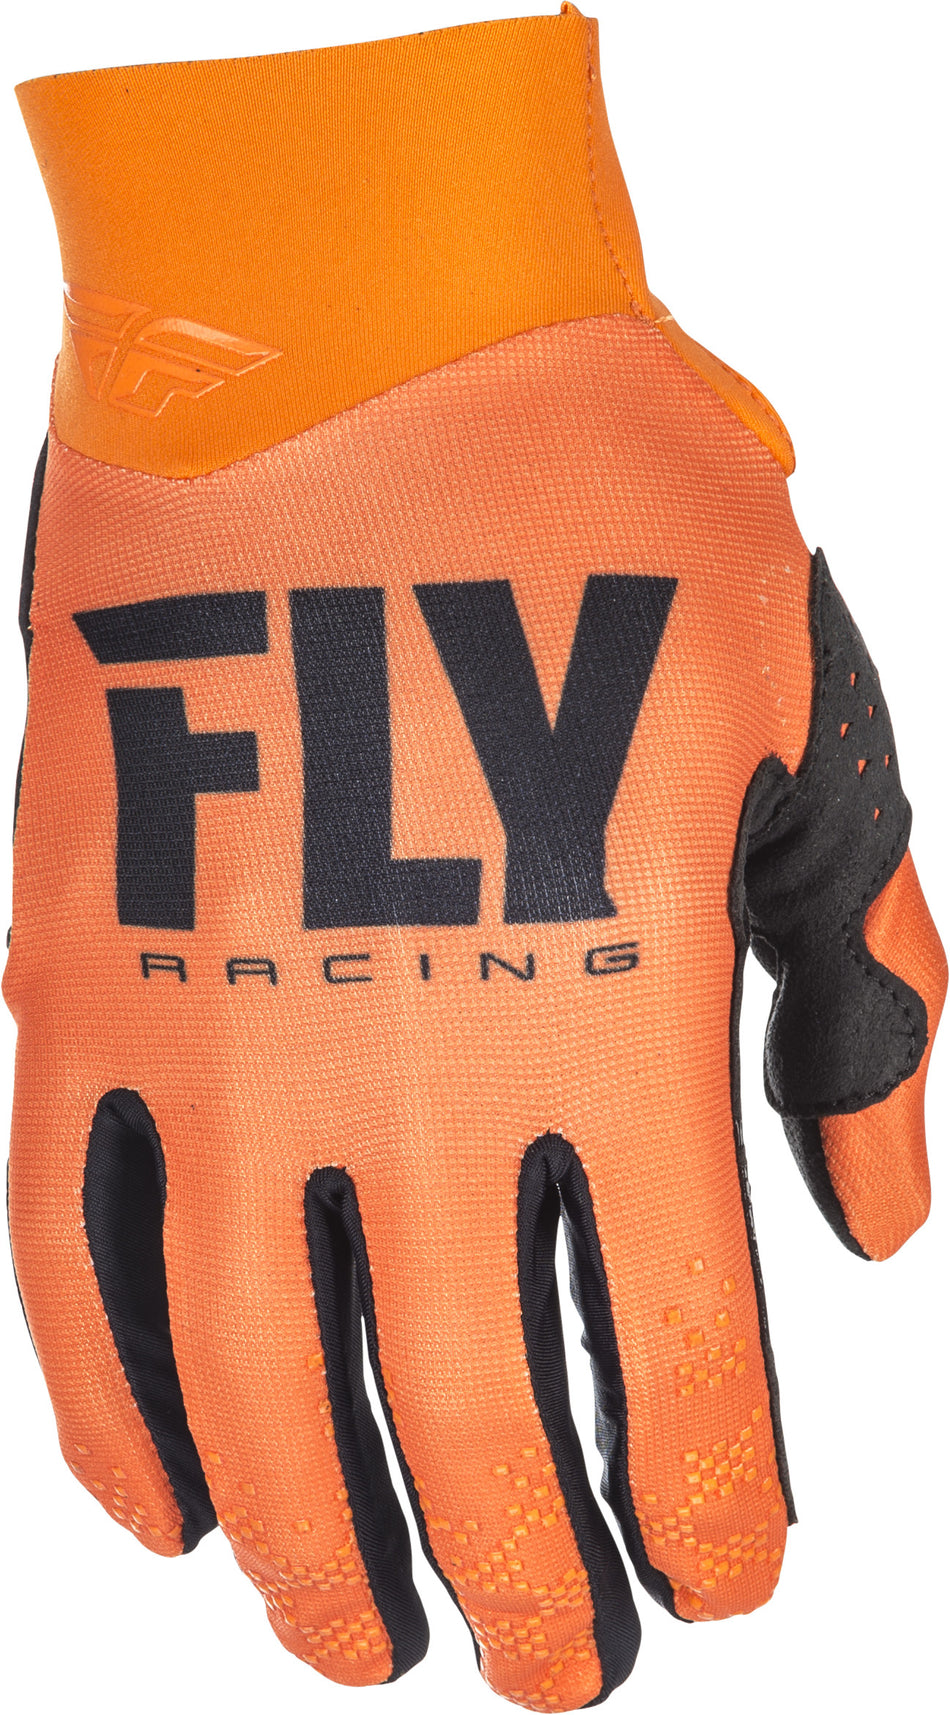 FLY RACING Pro Lite Gloves Orange Sz 12 371-81812